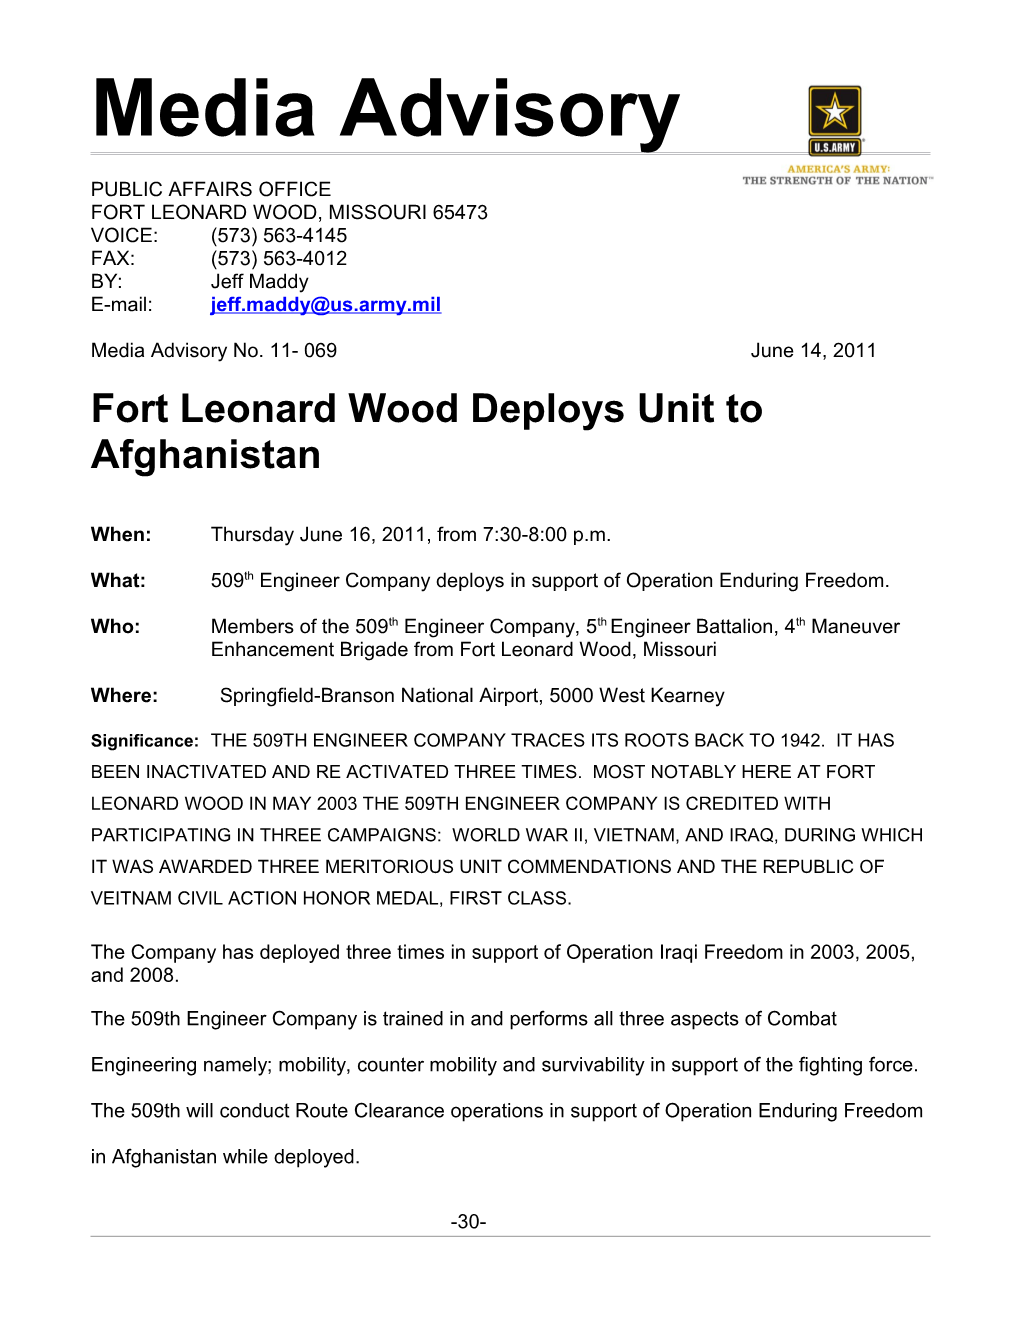 Fort Leonard Wood Deploys Unit to Afghanistan